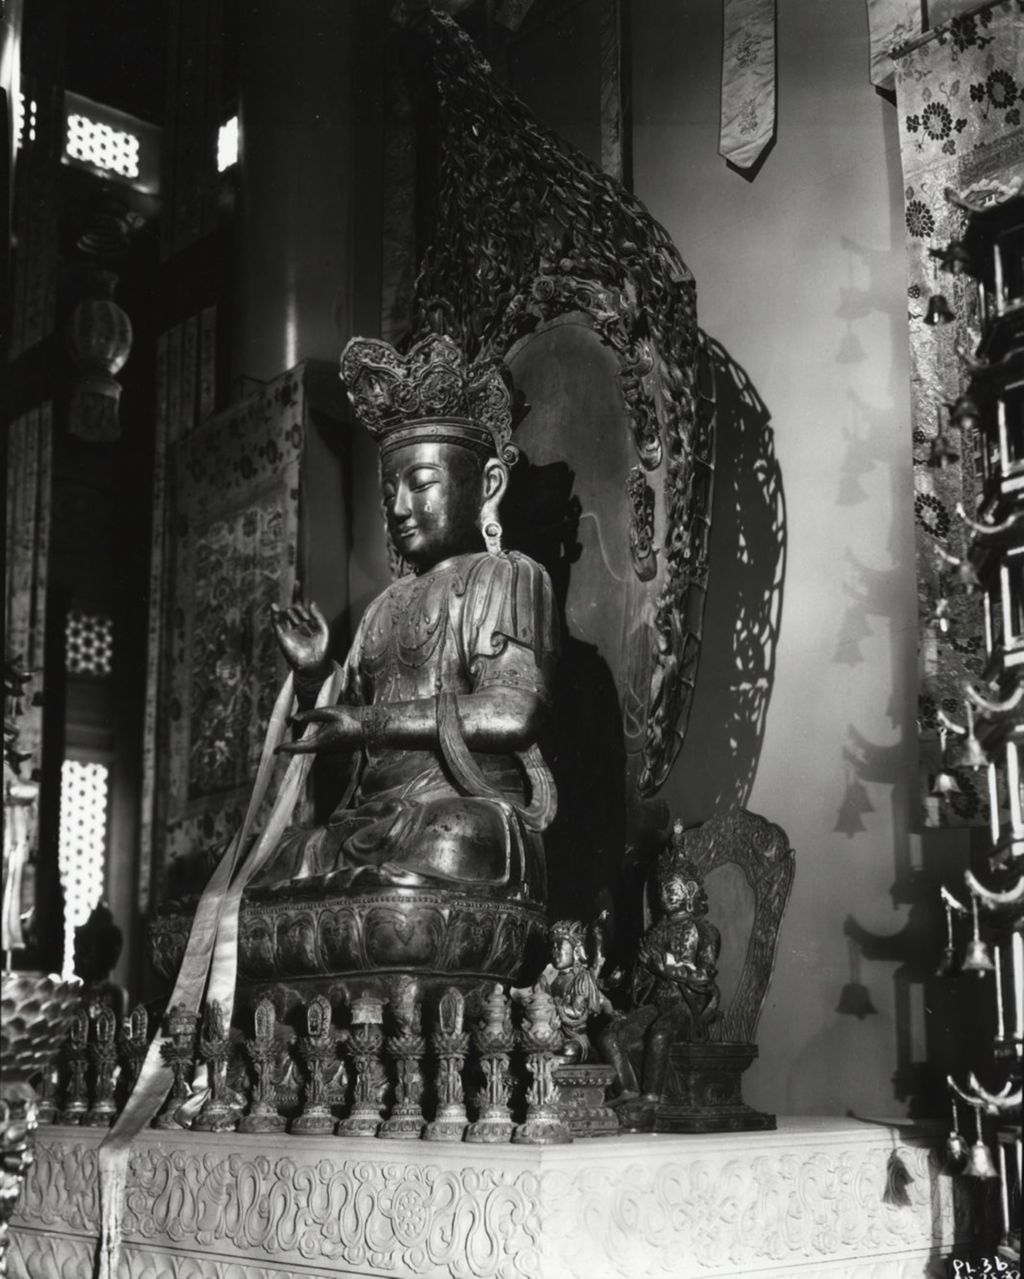 Miniature of Buddha statue at the Lama Temple exhibit